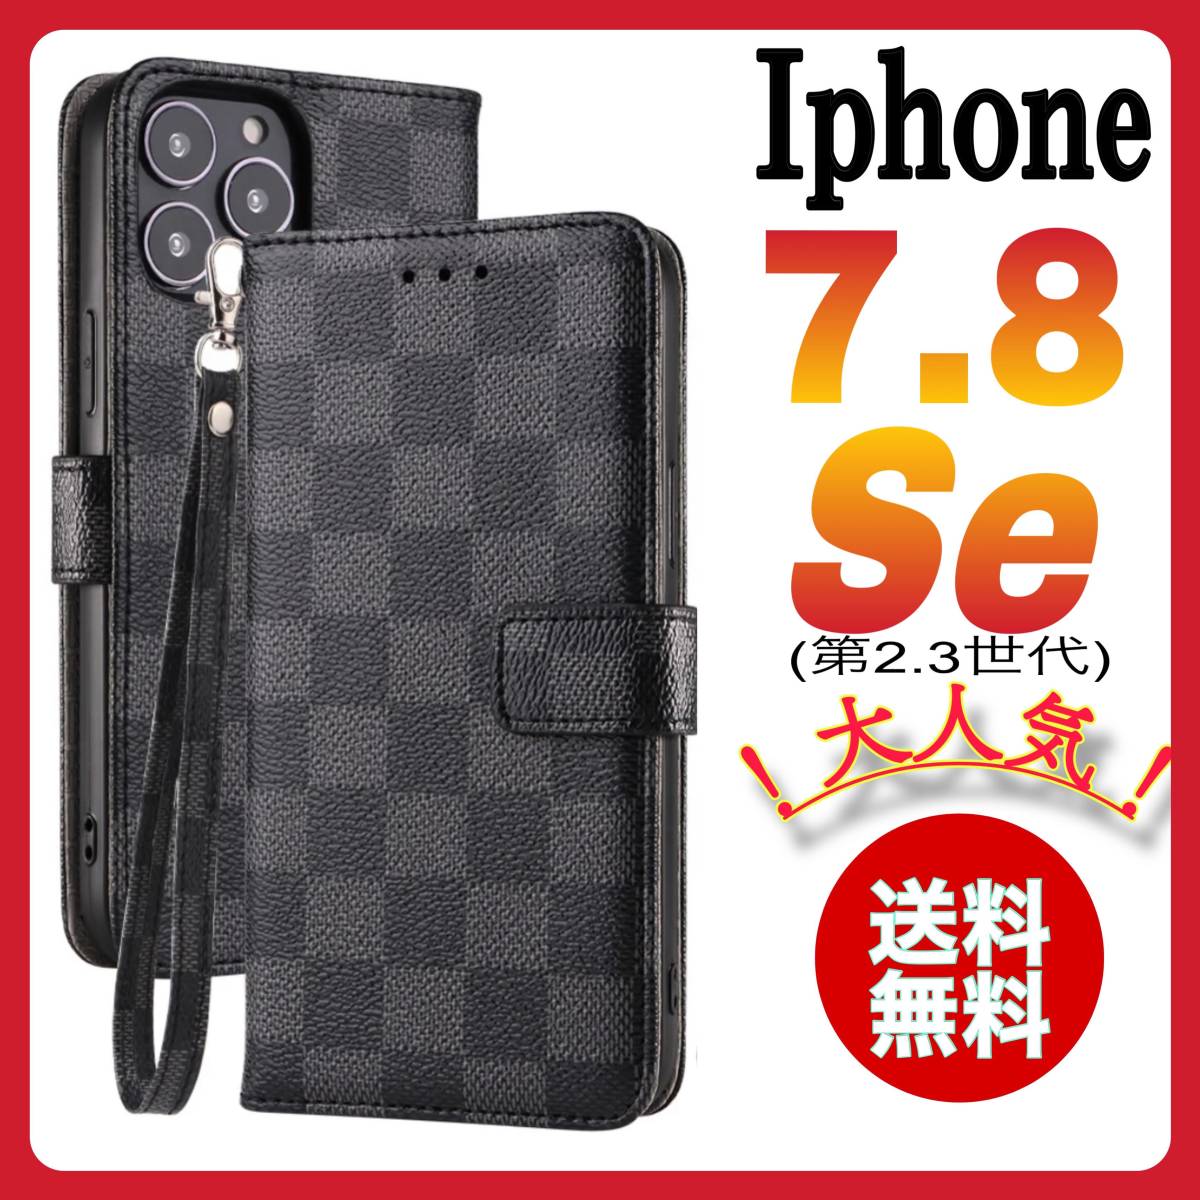 IphoneSe第2世代 iphoneSe第3世代 iphone7 iphone8ケース 手帳型 黒色 チェック柄 PUレザー 大人気 シンプル スリムシック 高級デザインの画像1